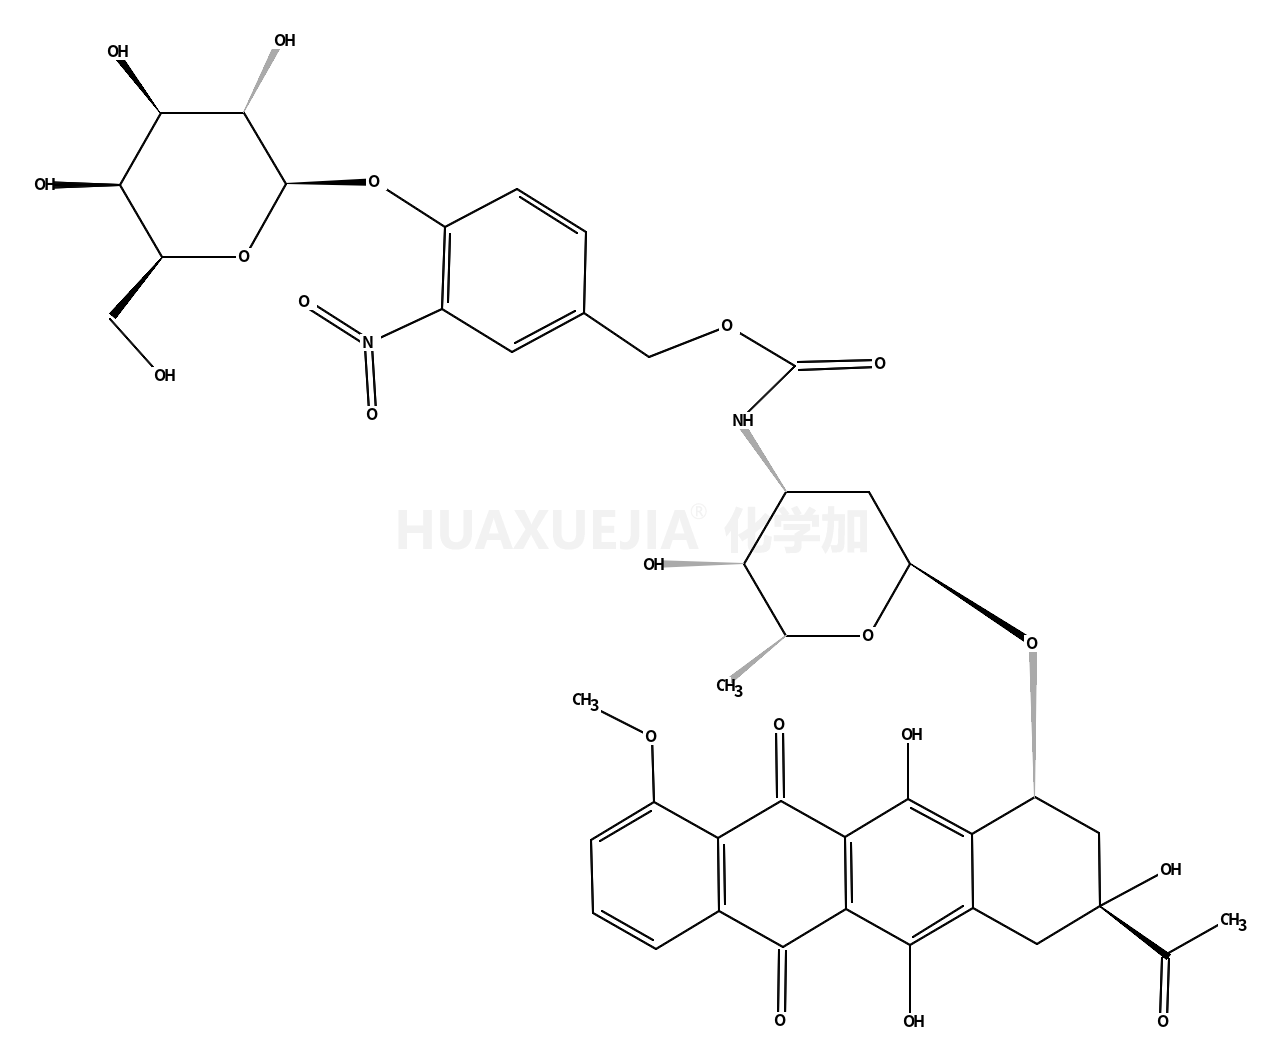 [3-nitro-4-[(2S,3R,4S,5R,6R)-3,4,5-trihydroxy-6-(hydroxymethyl)oxan-2-yl]oxyphenyl]methyl N-[(2S,3S,4S,6R)-6-[(3-acetyl-3,5,12-trihydroxy-10-methoxy-6,11-dioxo-2,4-dihydro-1H-tetracen-1-yl)oxy]-3-hydroxy-2-methyloxan-4-yl]carbamate